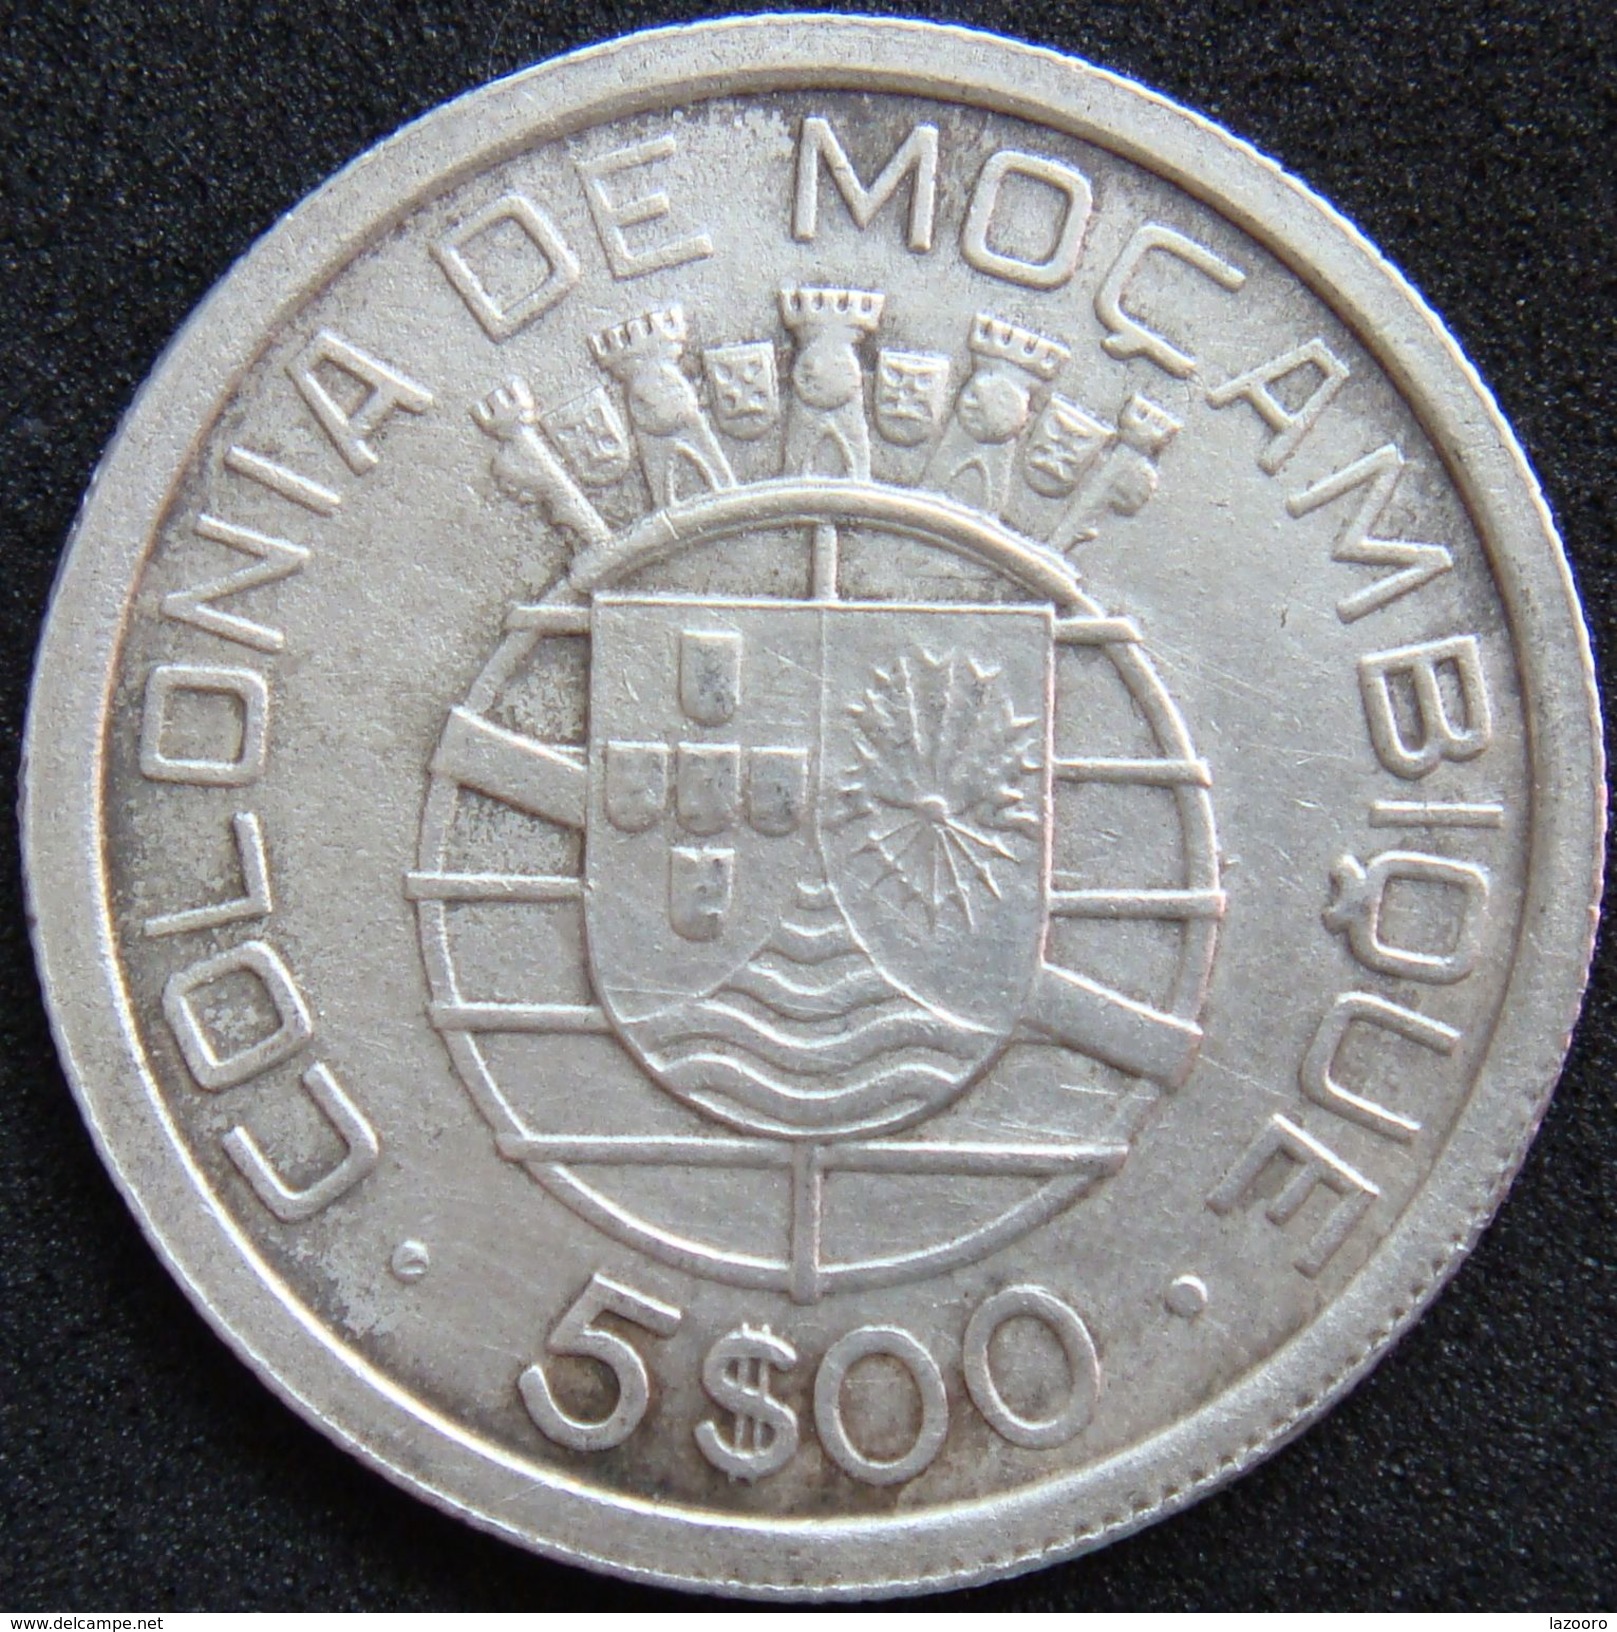 LaZooRo: Mozambique 5 $ 00 Escudos 1938 VF - Silver - Mozambique